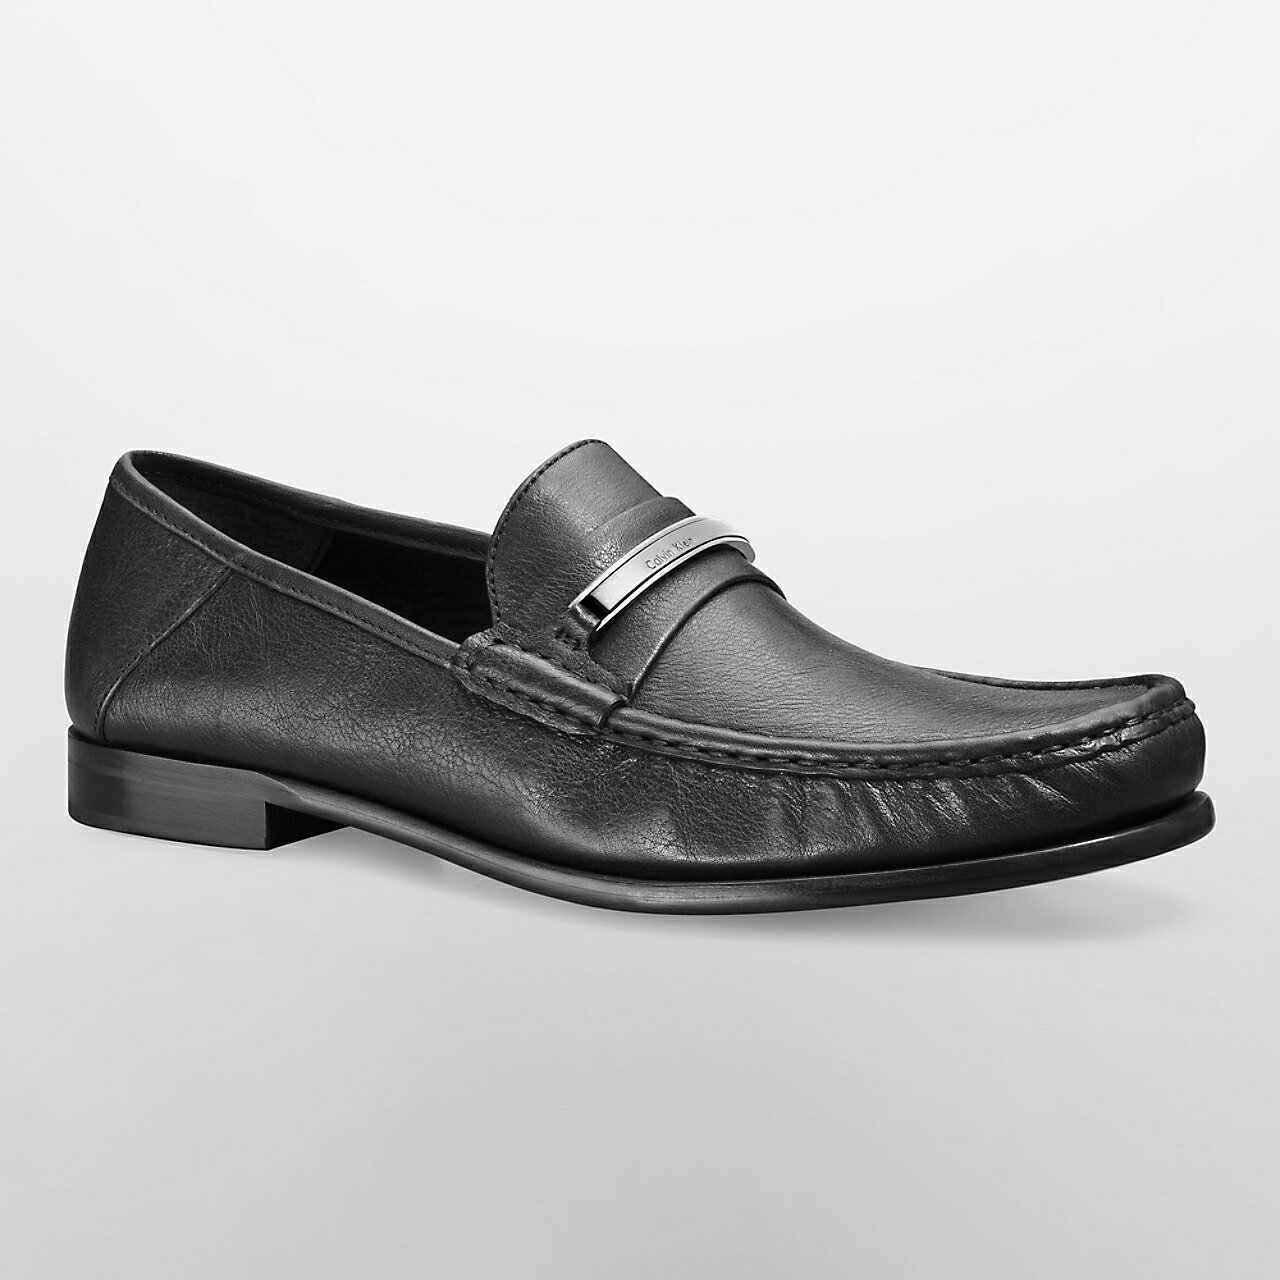 美國百分百【Calvin Klein】鞋子 CK 真皮 休閒鞋 樂福鞋 Loafer 皮鞋 Duke 男鞋 US 10.5號、11號 G109